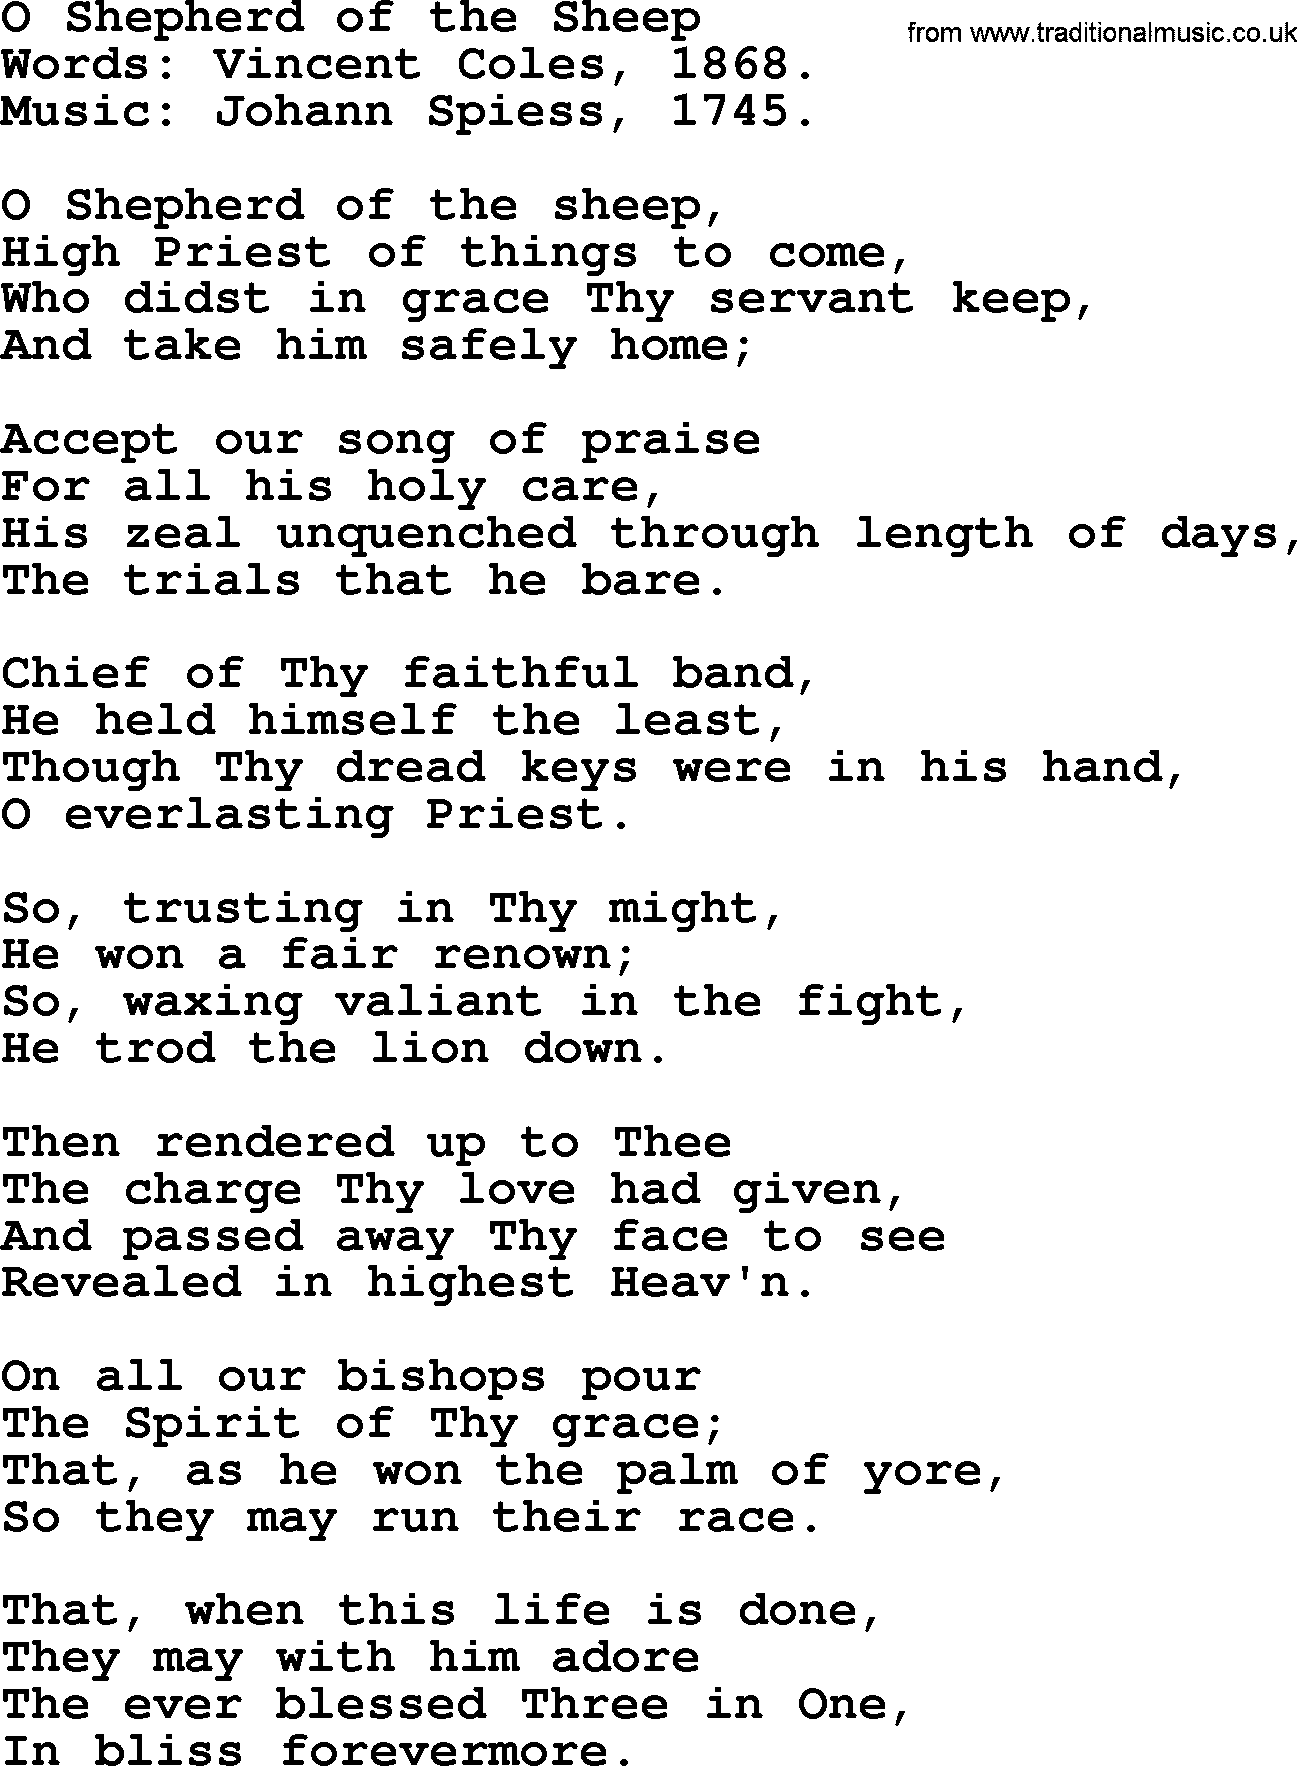 Philip Bliss Song: O Shepherd Of The Sheep, lyrics